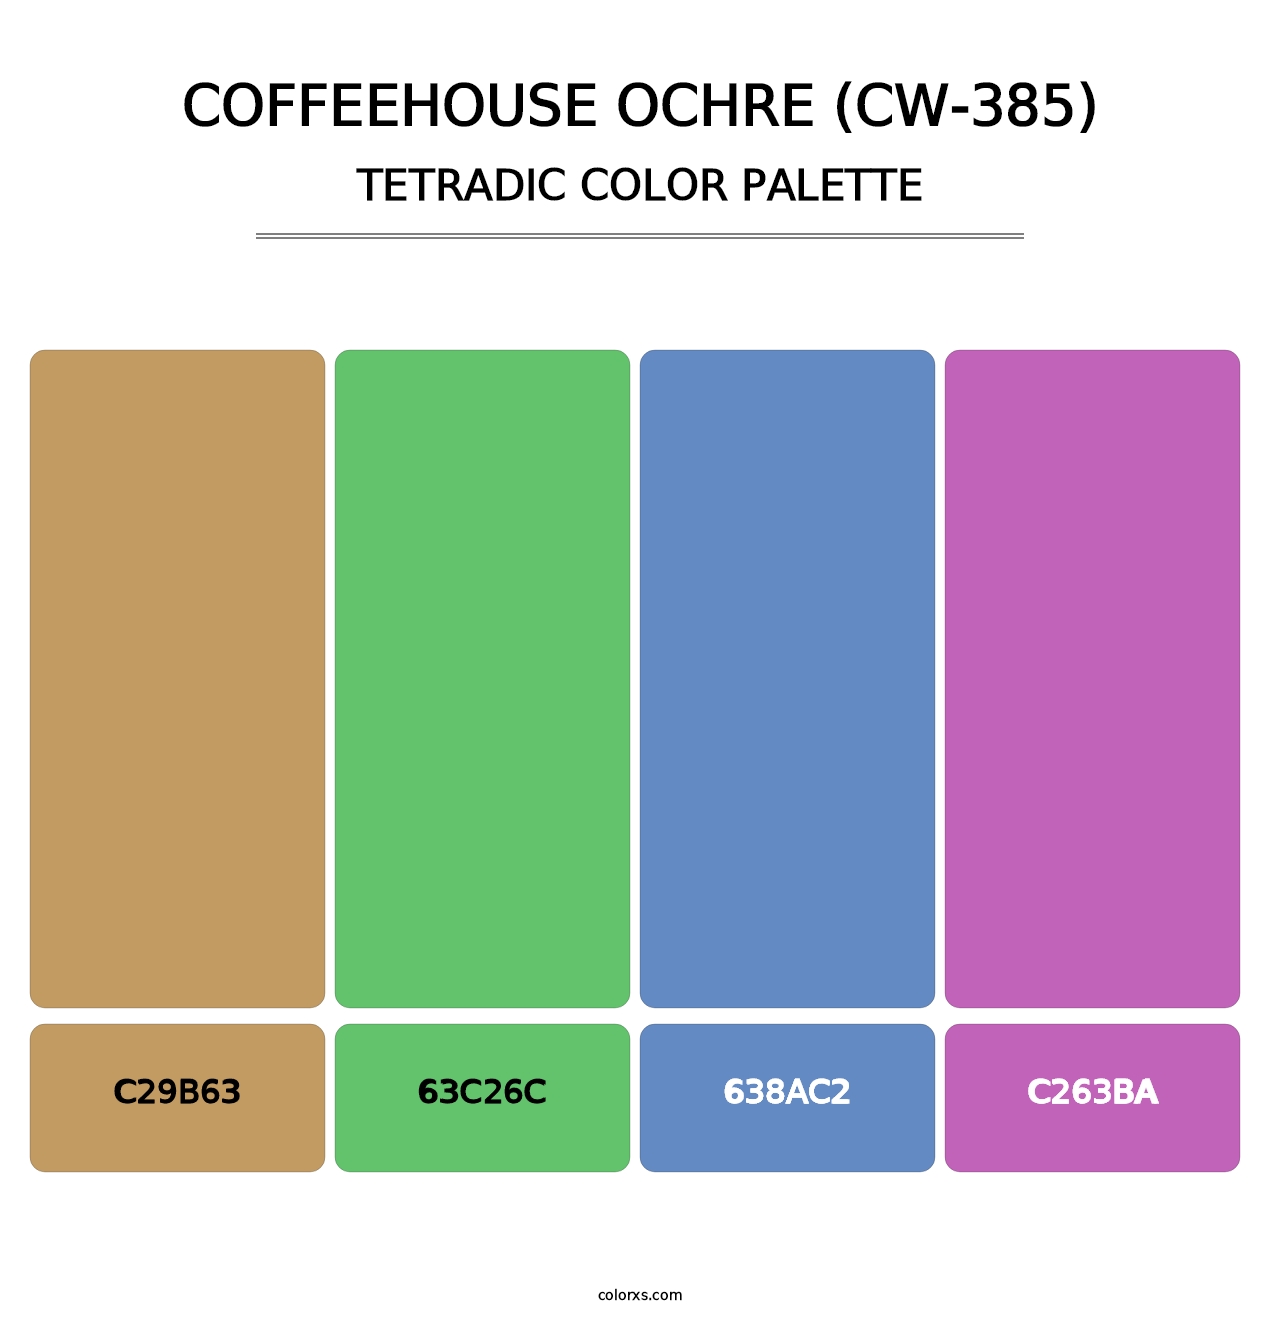 Coffeehouse Ochre (CW-385) - Tetradic Color Palette